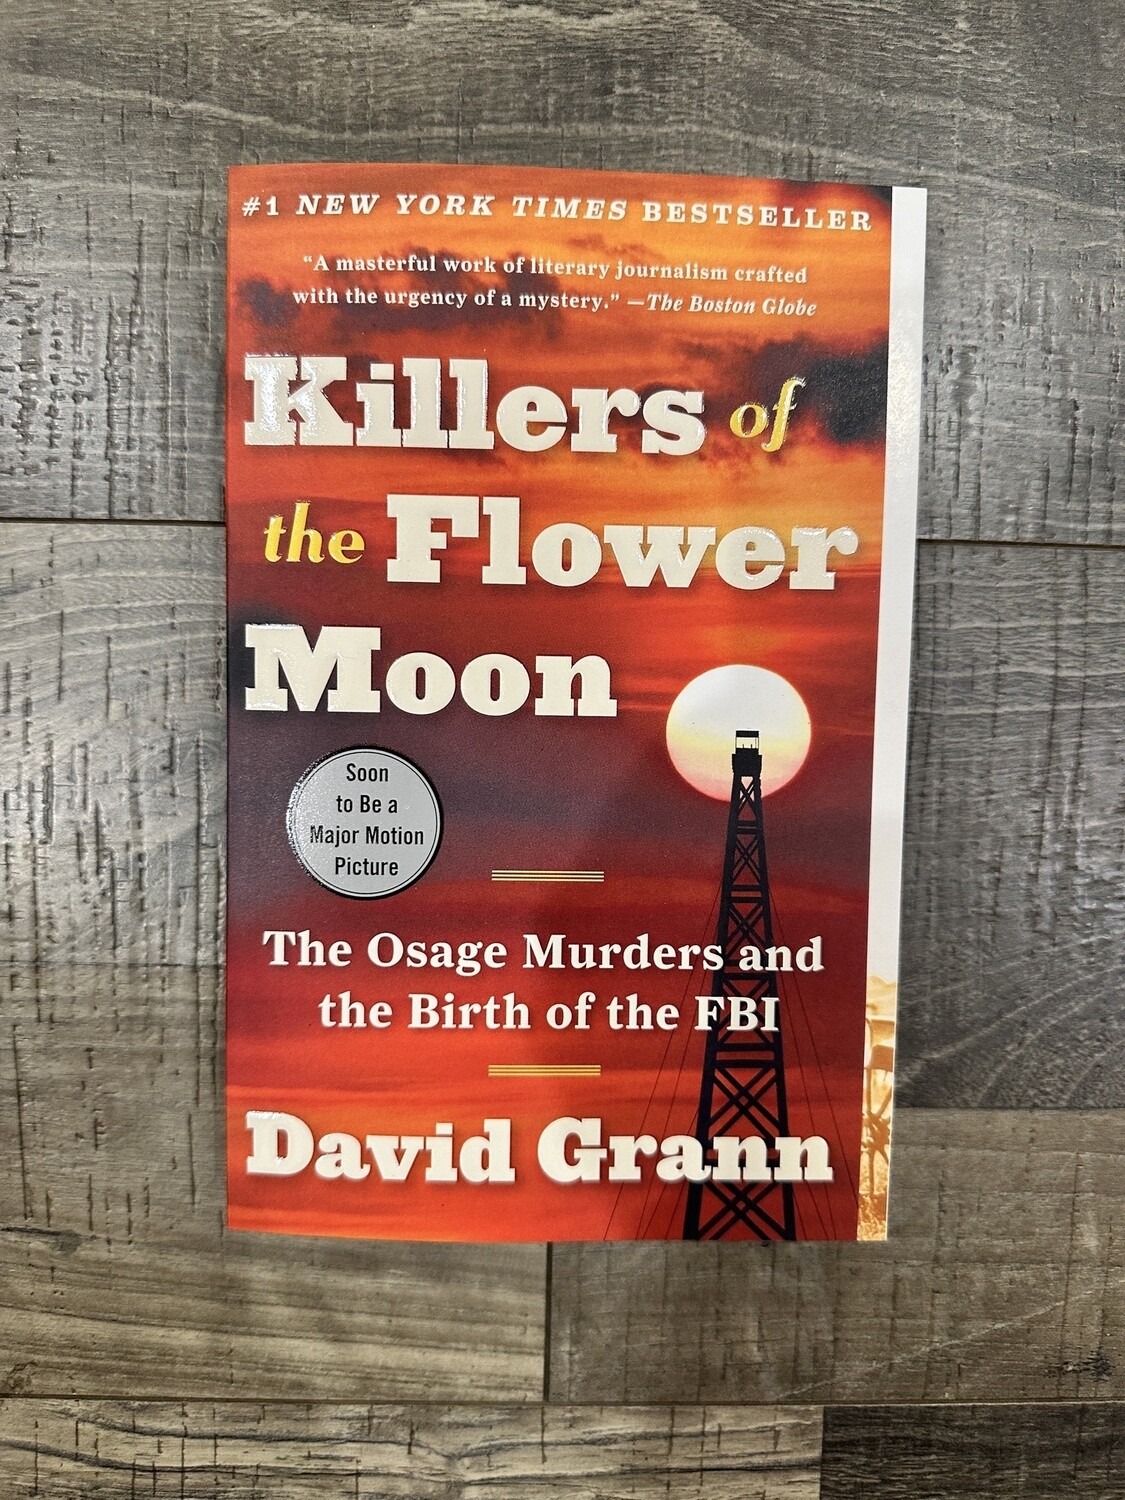 Grann, David- Killers of the Flower Moon